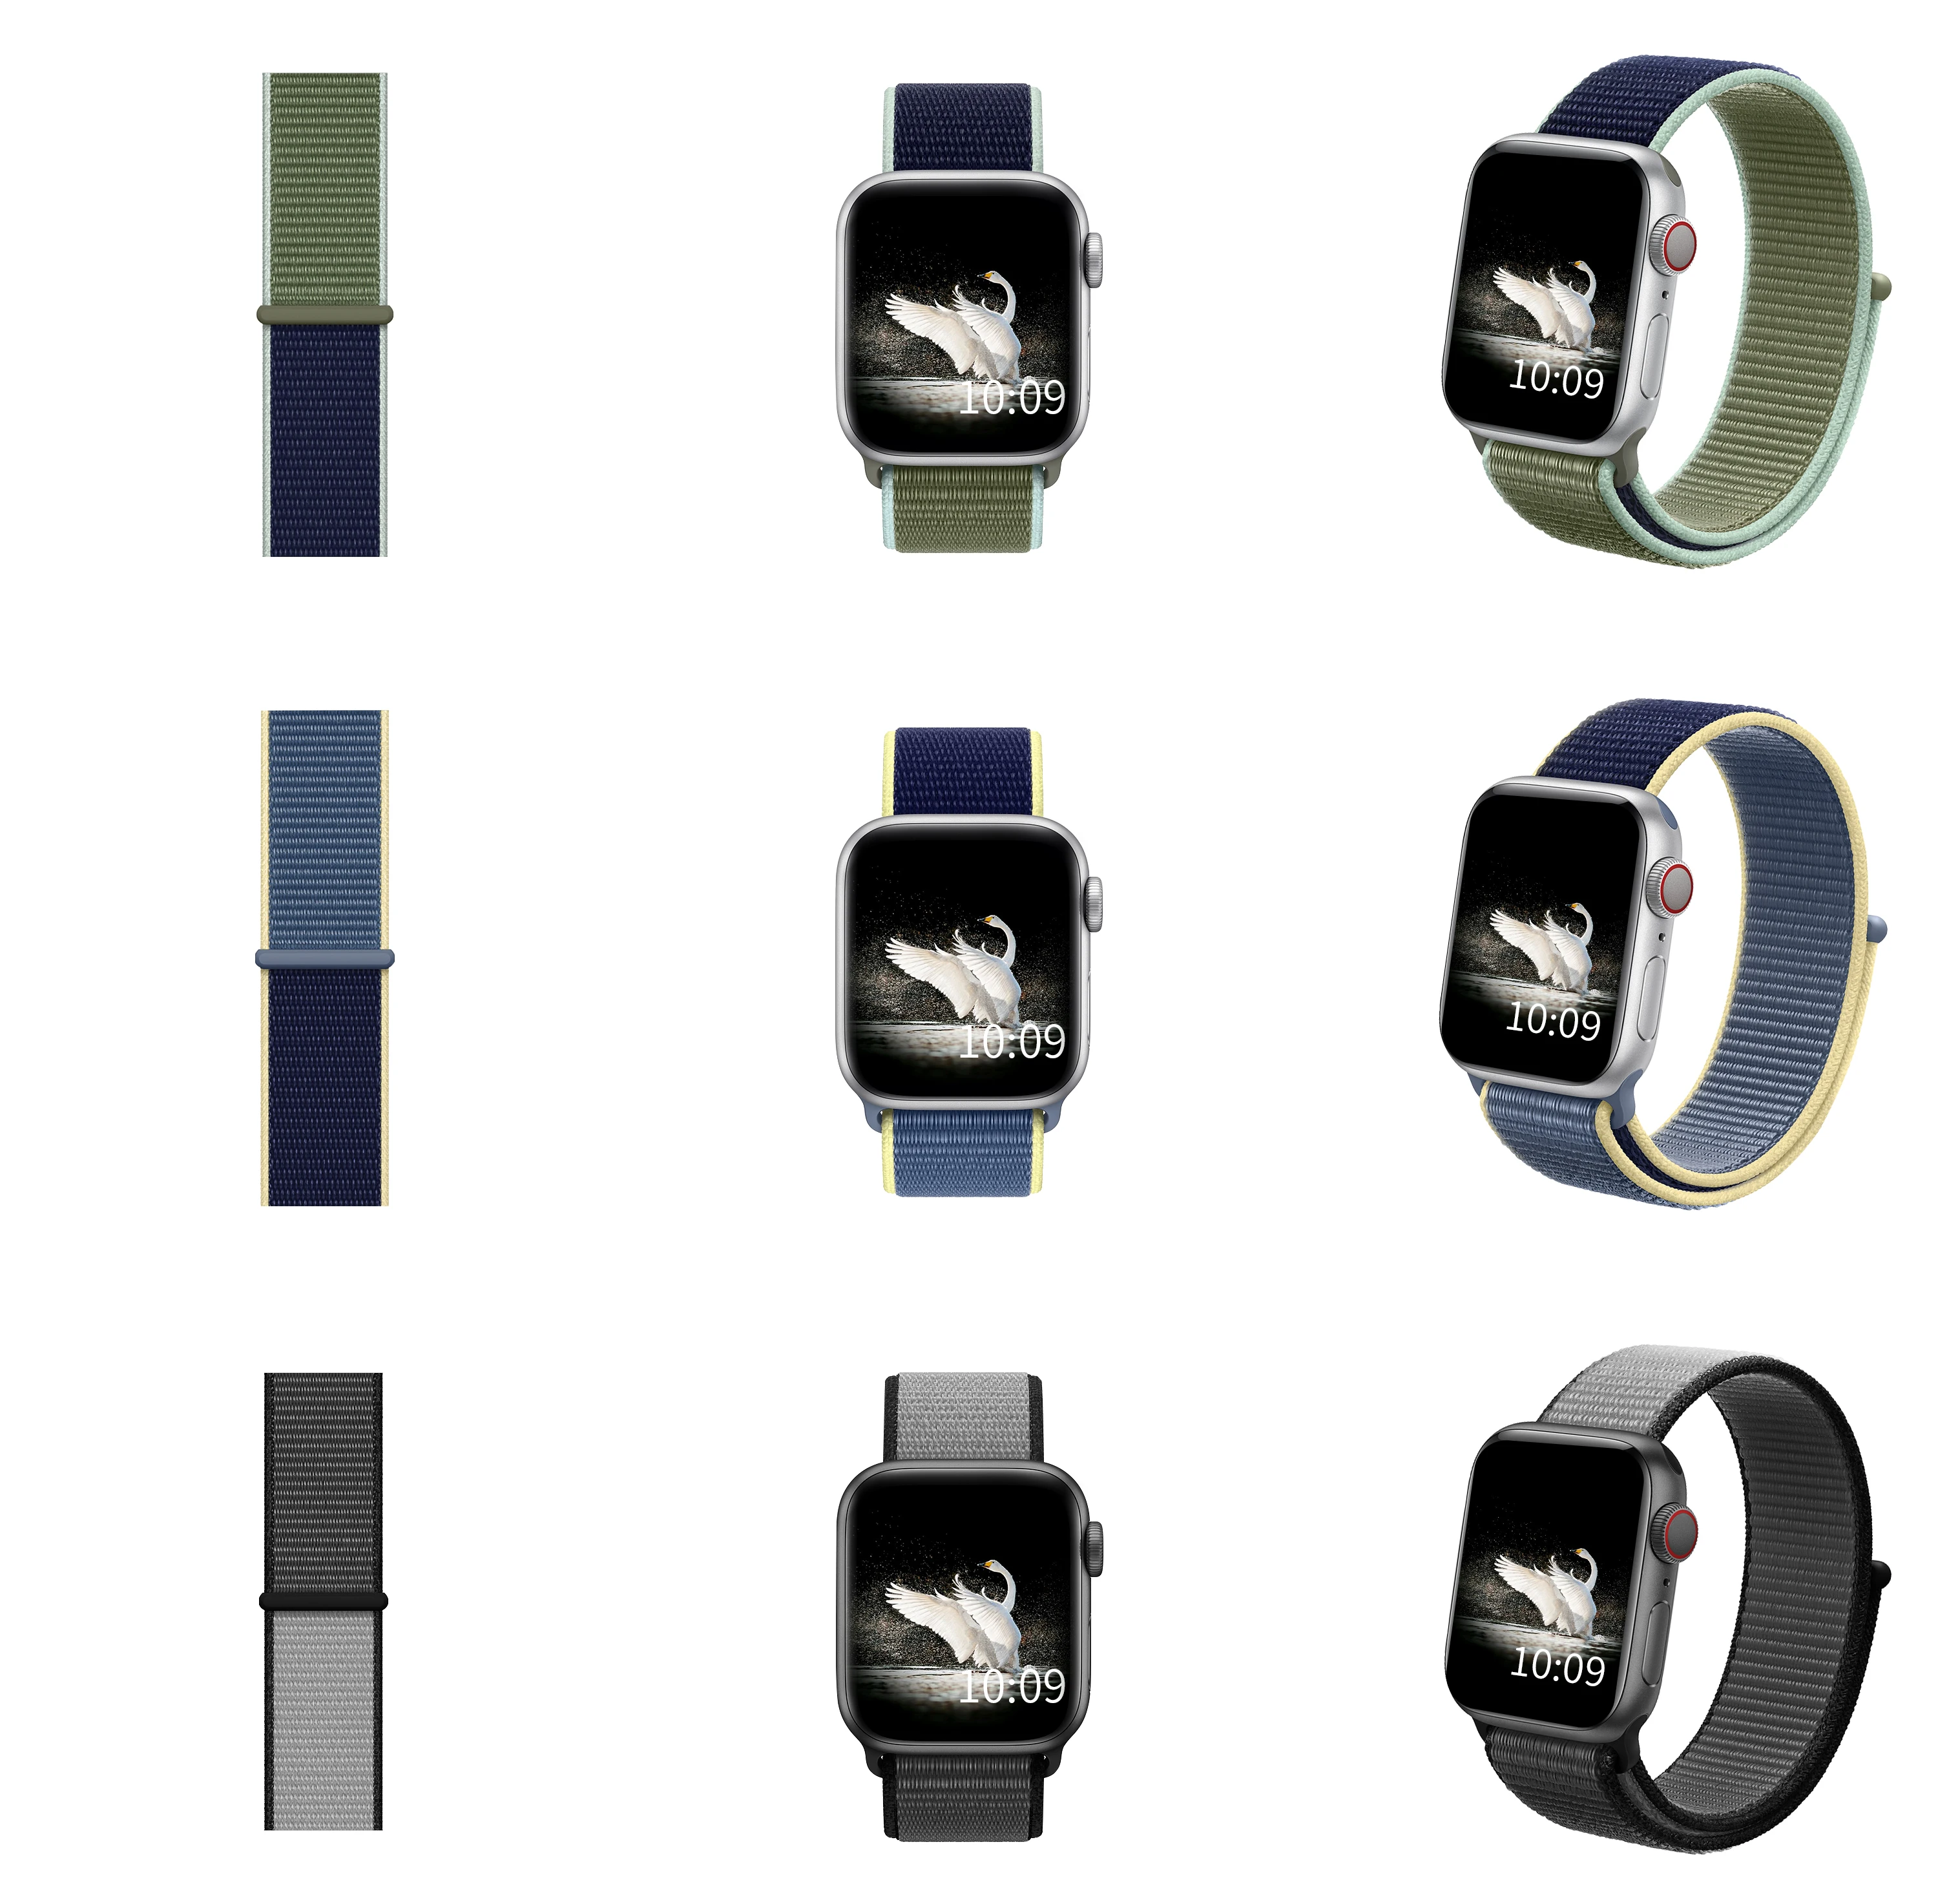 DIMU ремешок для наручных часов Apple Watch Series 5/4/3/2 38 мм 42 мм нейлон из мягкой дышащей ткани сменный ремешок для наручных часов iWatch, версия спортивный ремешок для часов 42 мм 44 мм